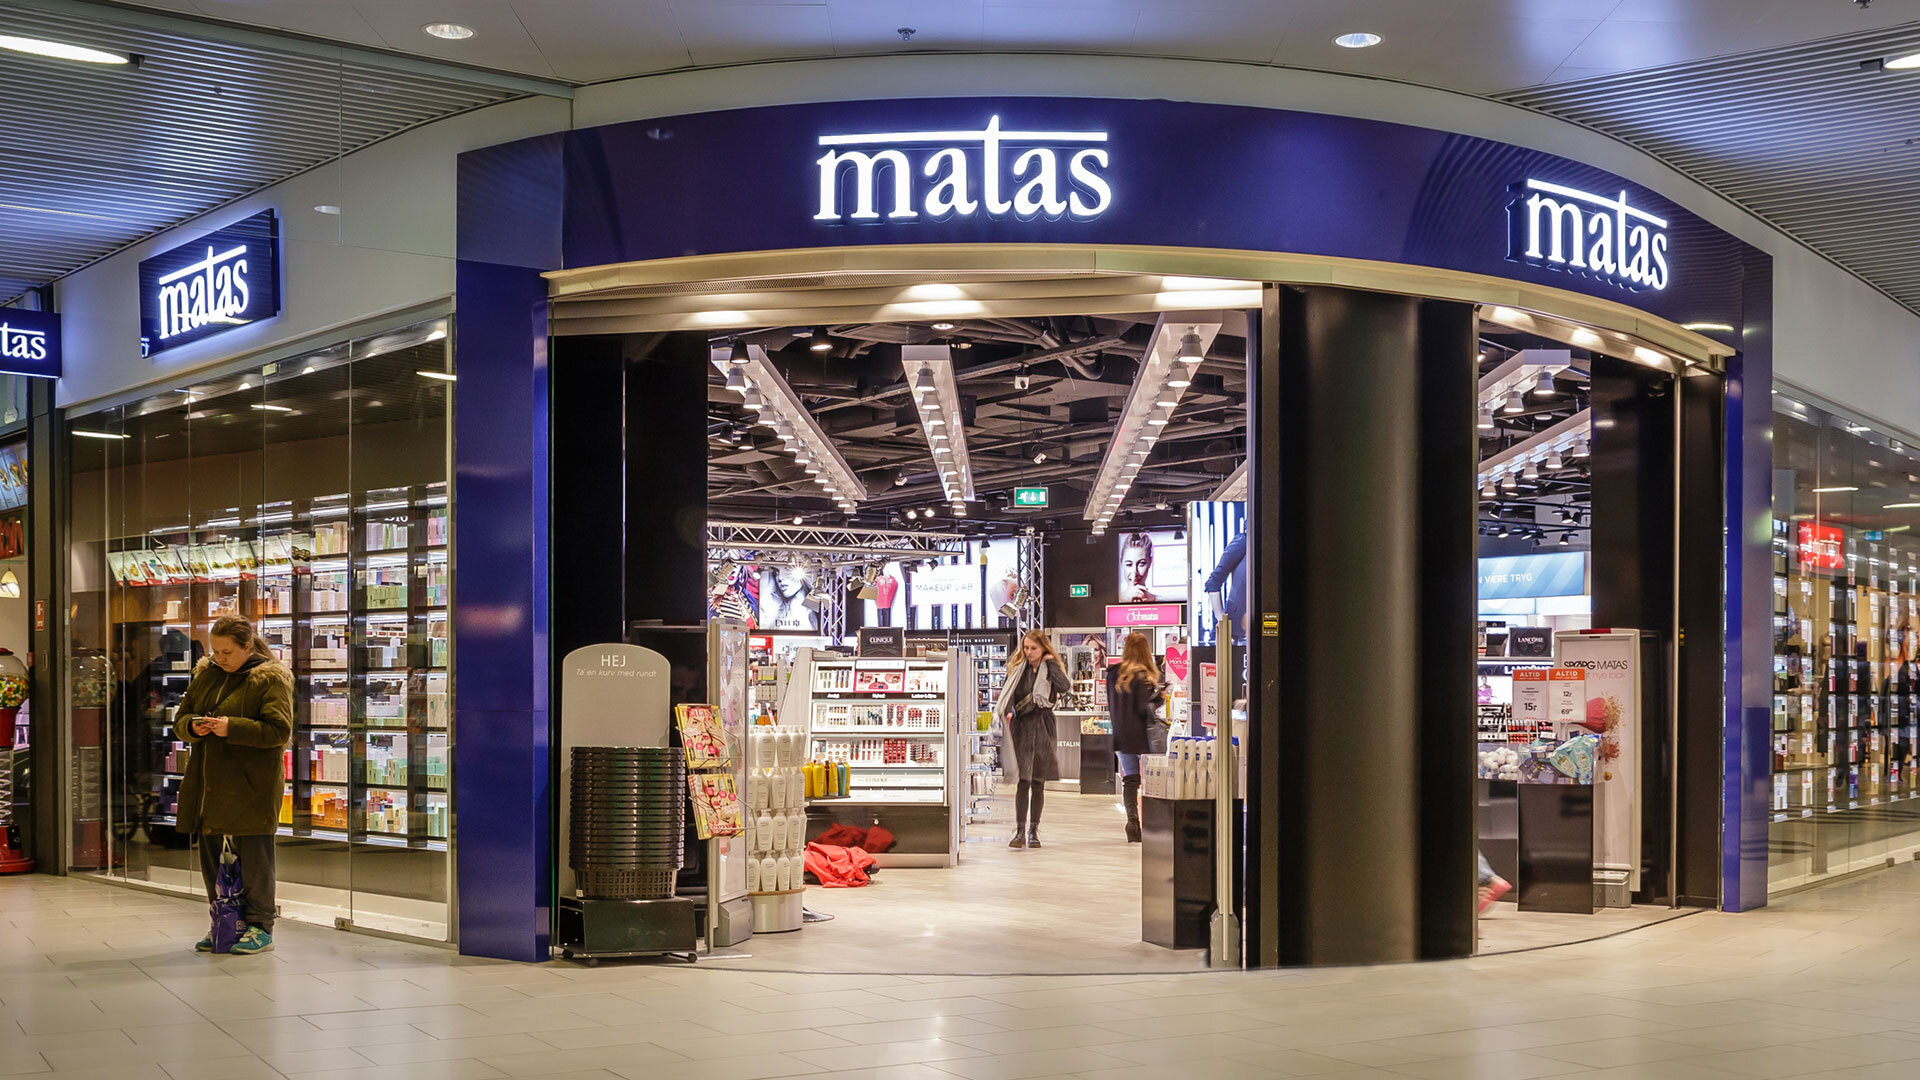 Matas offers unique customer experiences across platforms